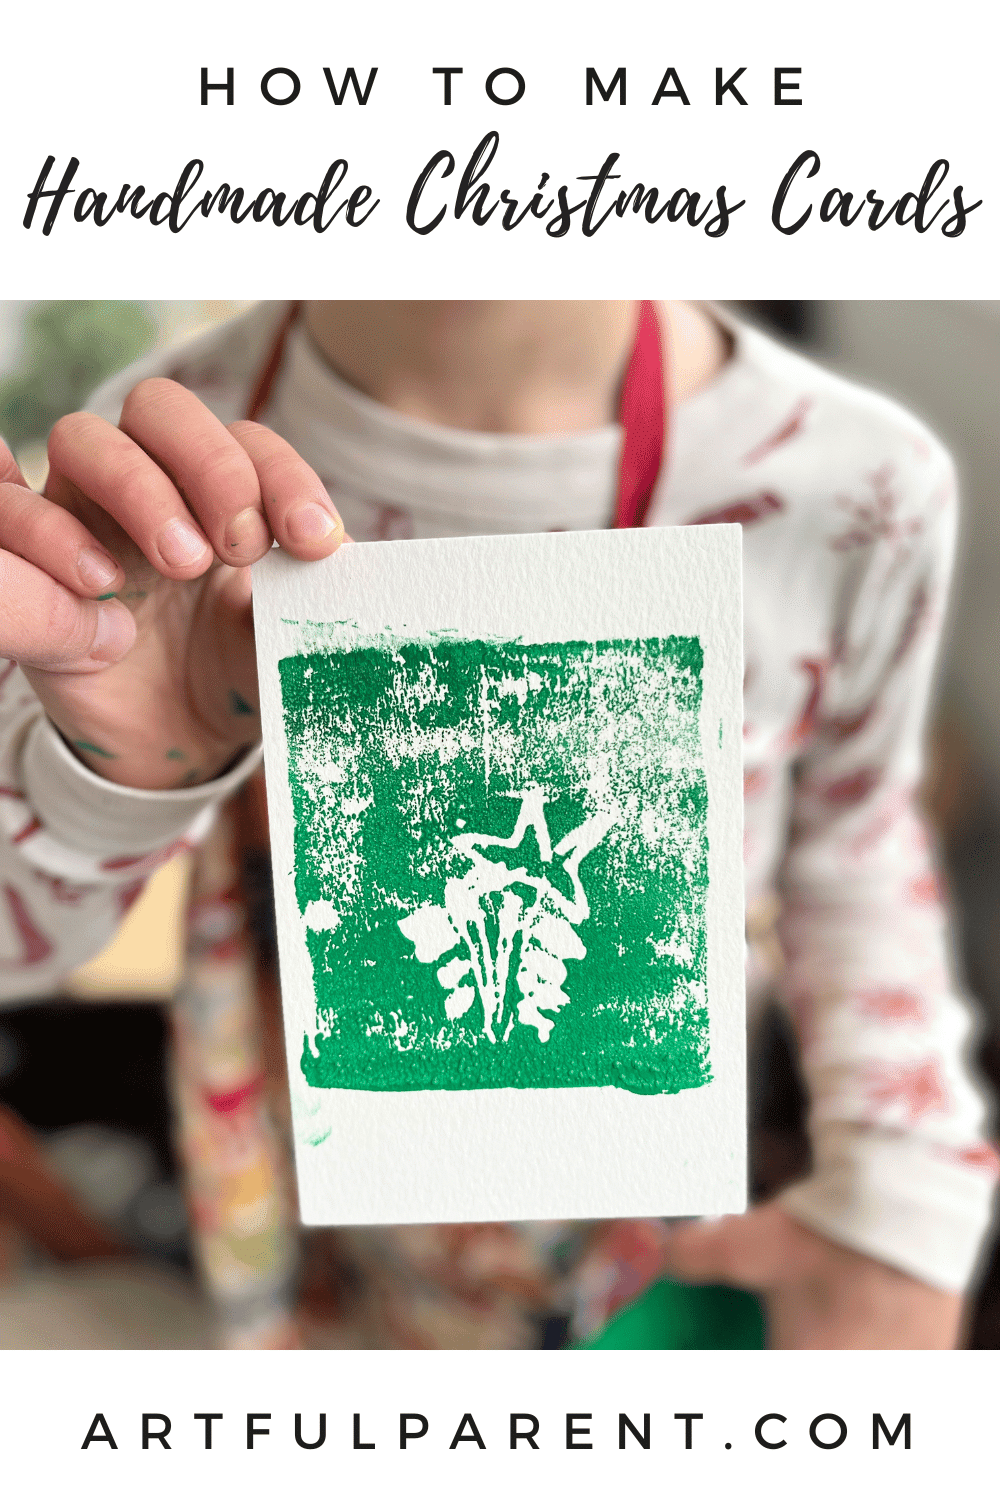 How to Make Handmade Christmas Cards with Styrofoam Printing